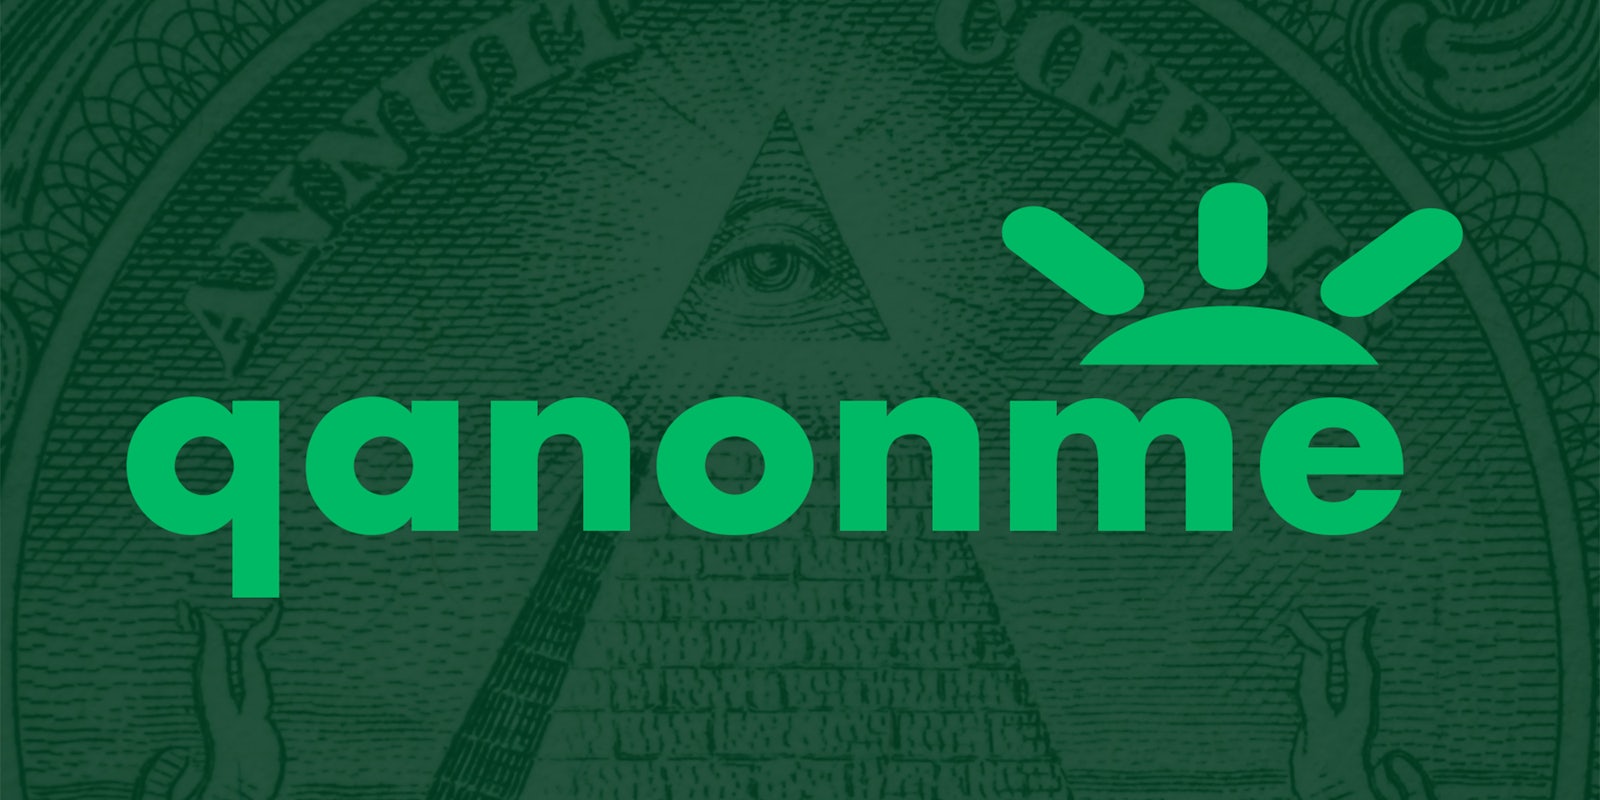 gofundme logo made to say 'qanonme'